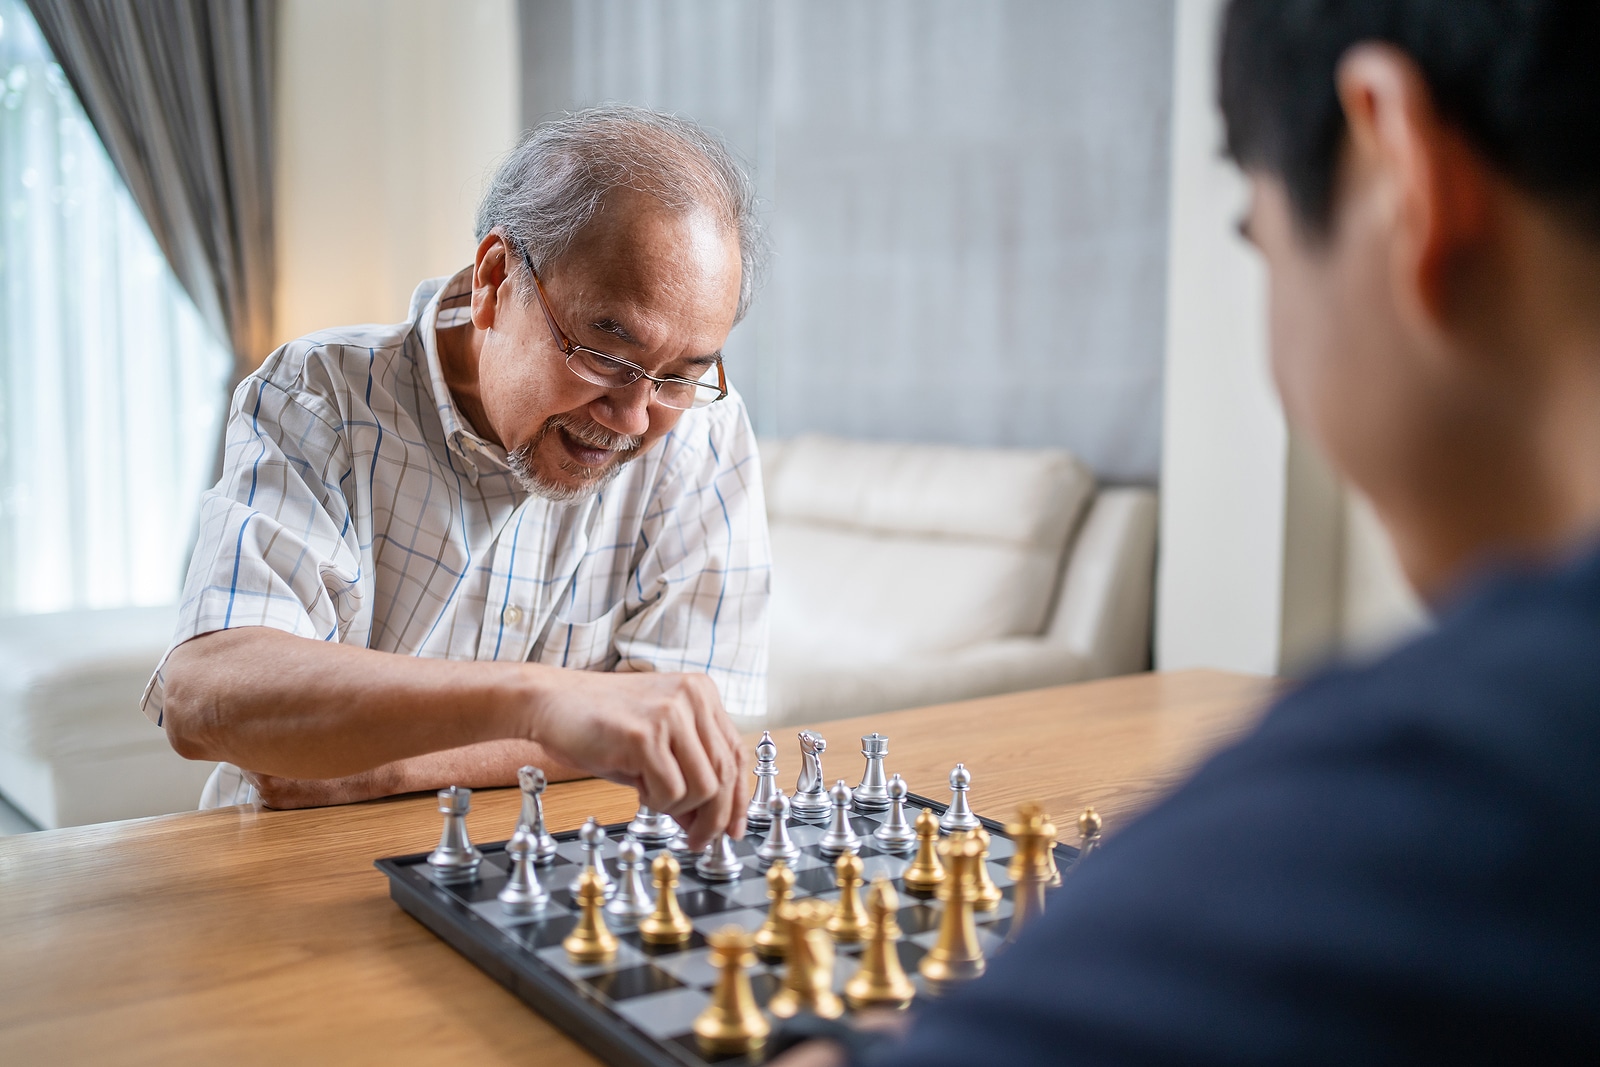 Local teens use chess to help seniors keep sharp minds, News